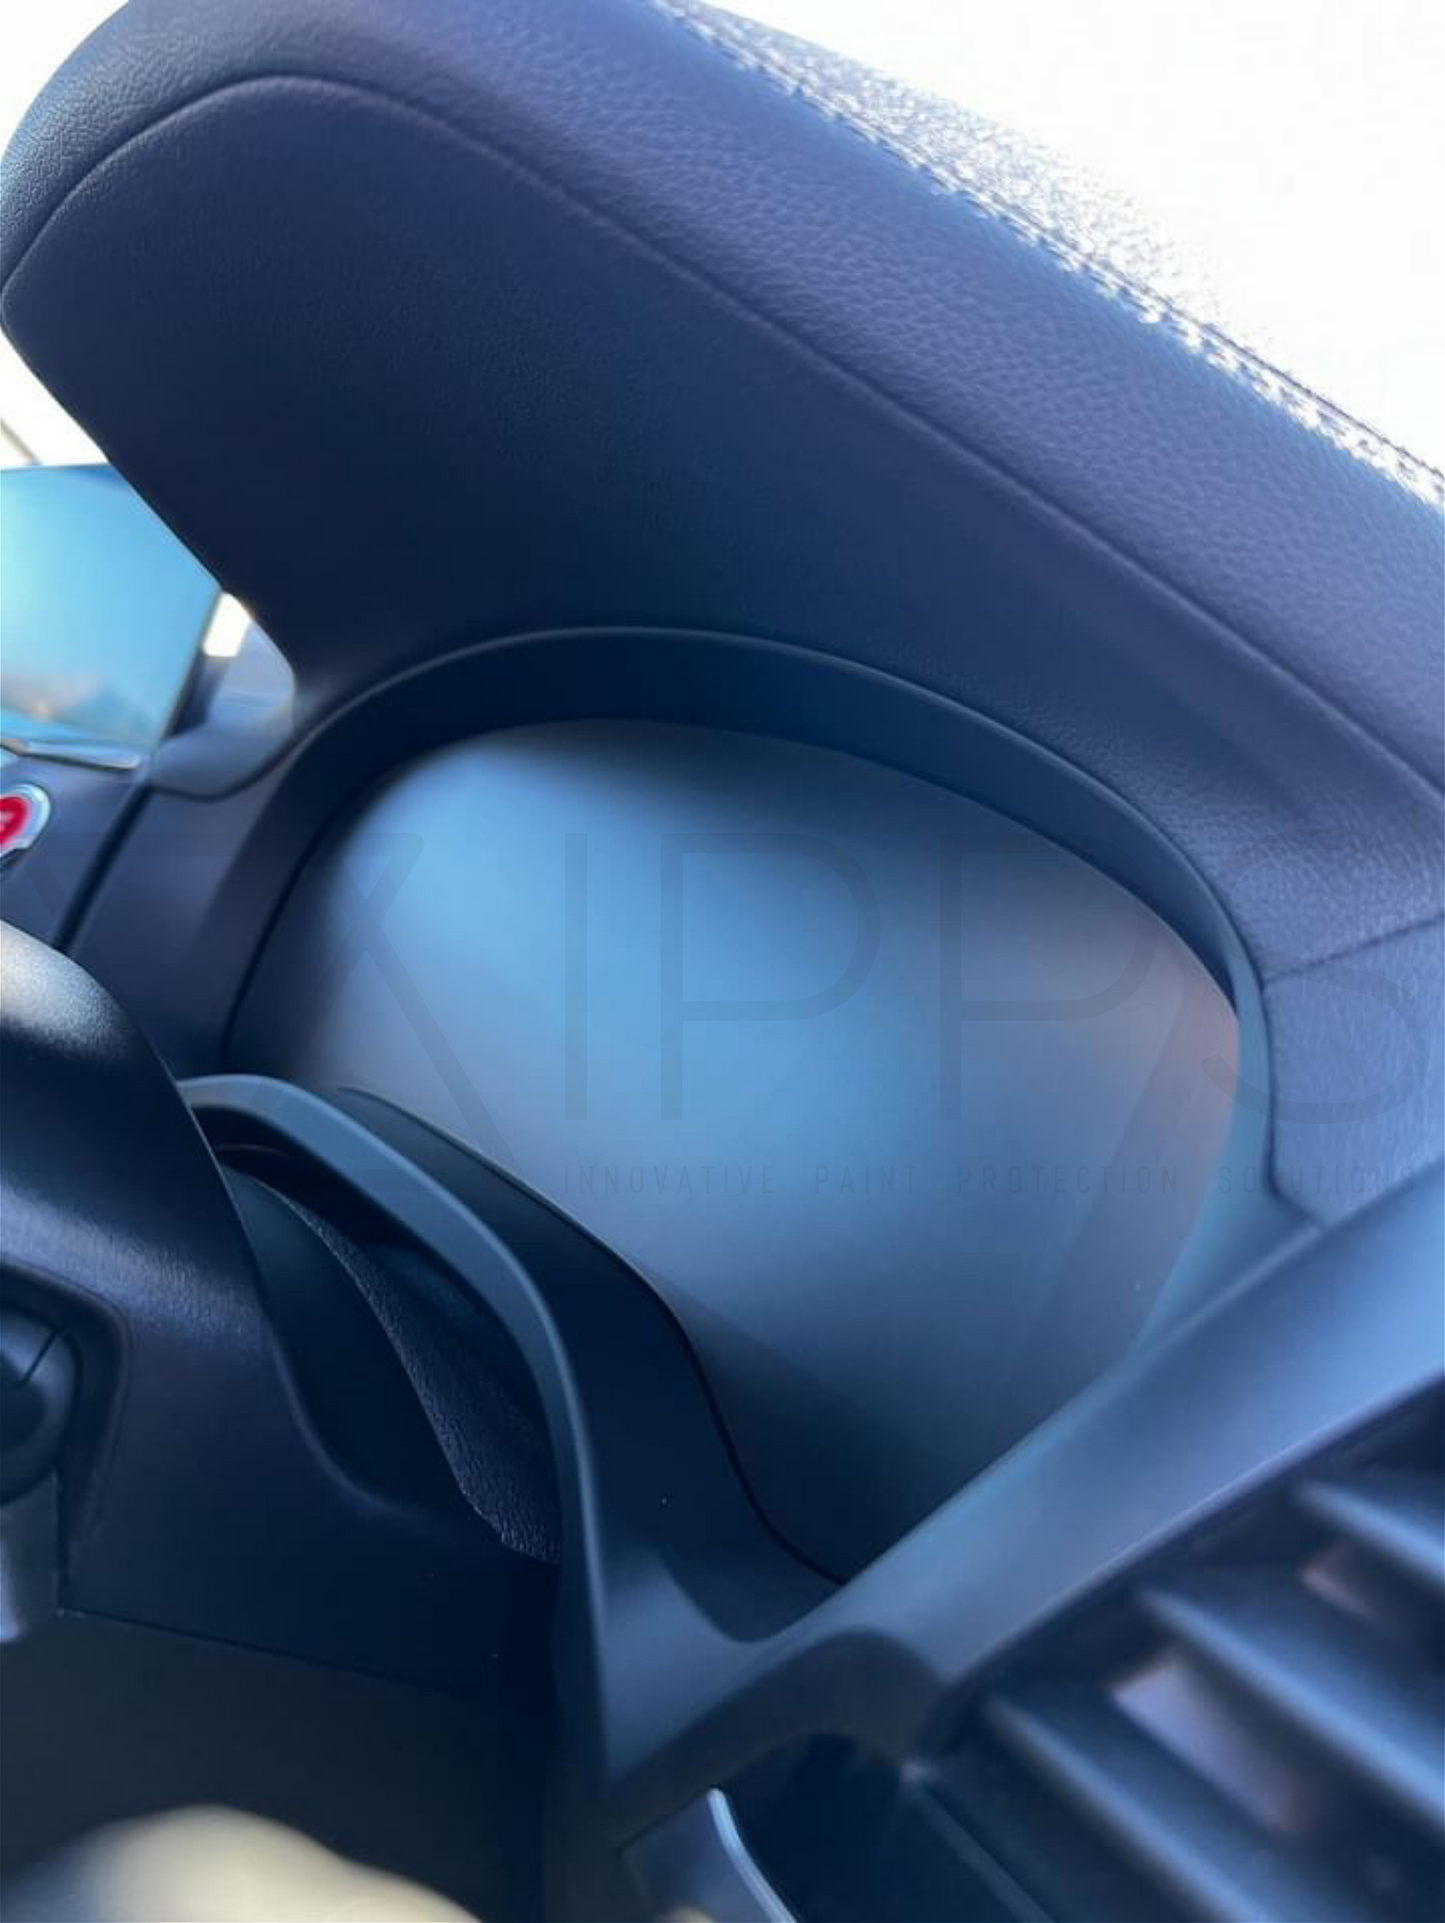 BMW G Series iDrive 7 Instrument Cluster / Virtual Cockpit Screen Protection Film Kit (G11 | G12 | G20 | G21 | G80 | G22 | G23 | G82 | G42 | G43)